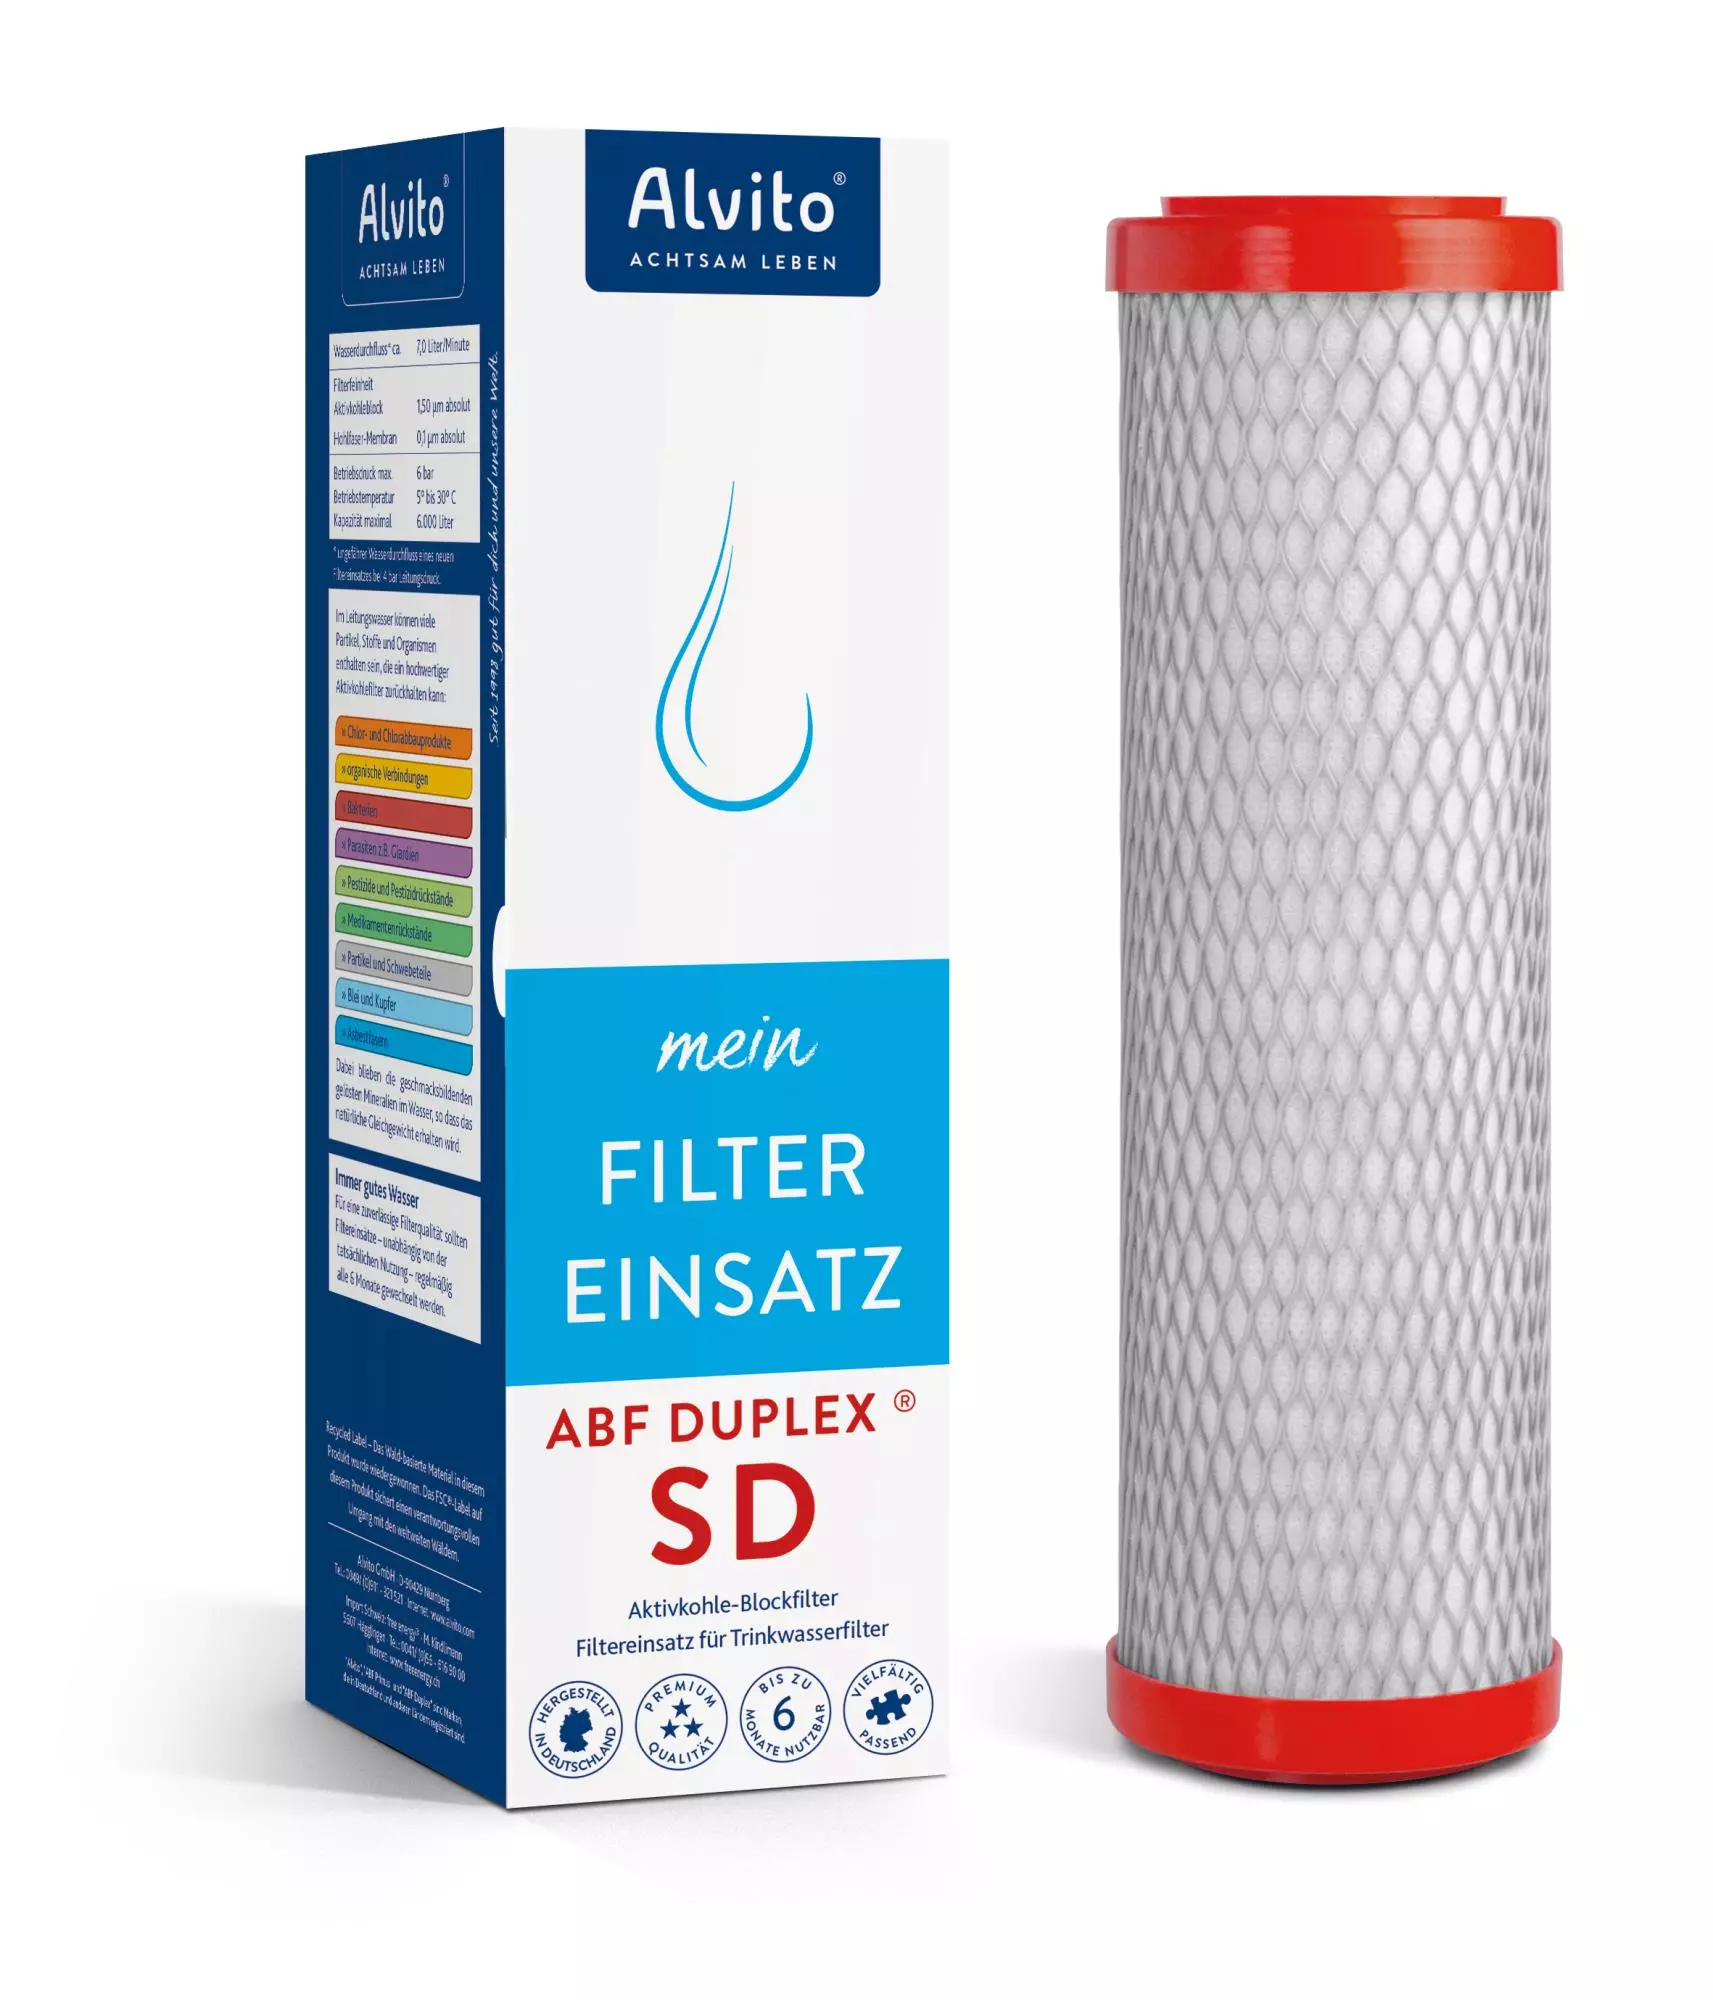 Alvito Filtereinsatz ABF Duplex SD